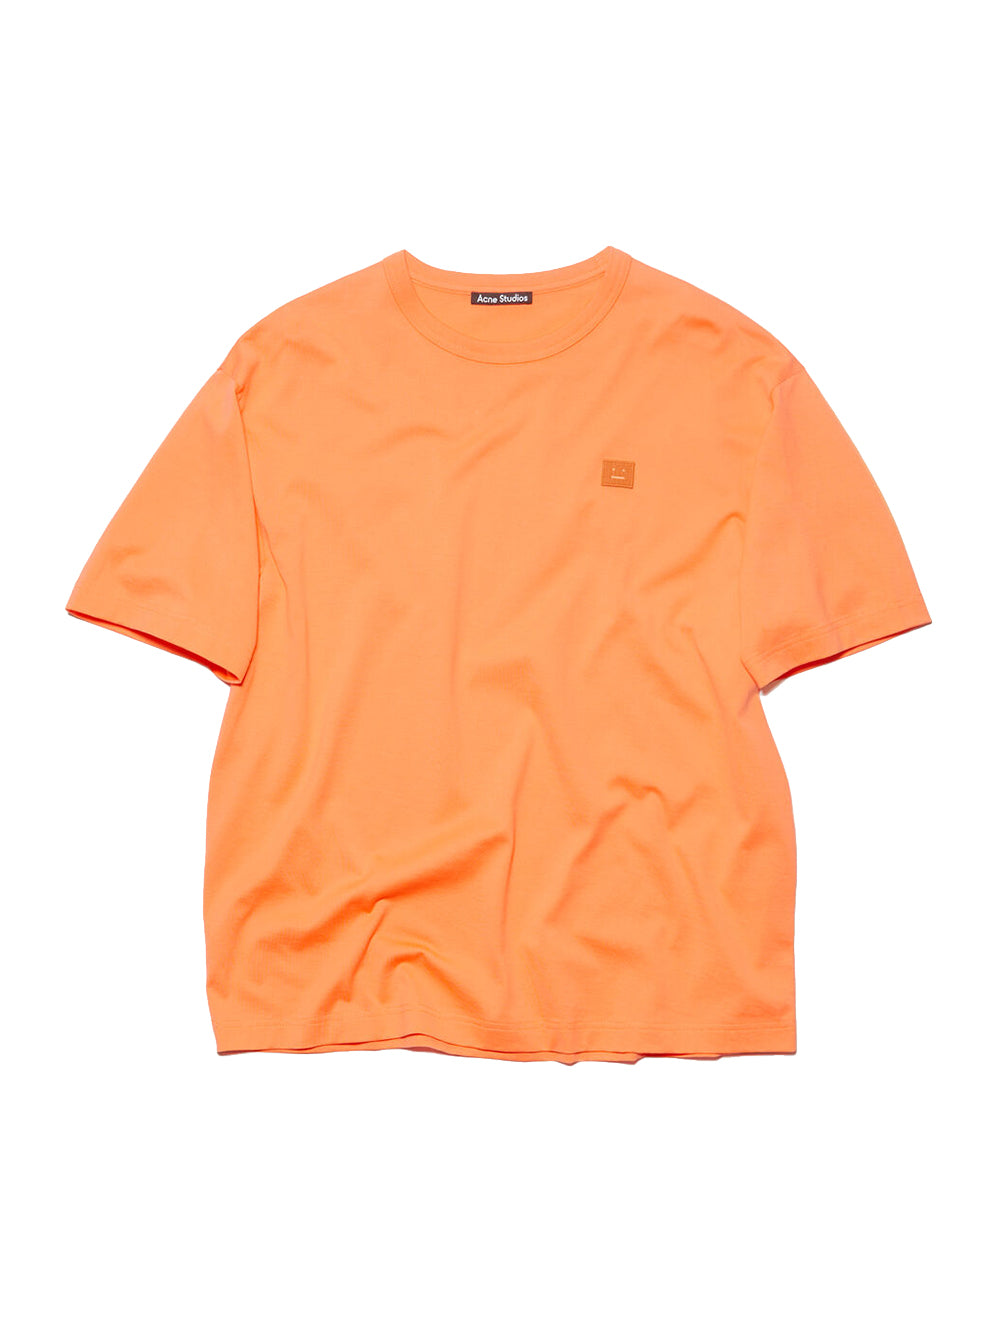 Relaxed Fit Crew Neck T-Shirts (Mandarin Orange)